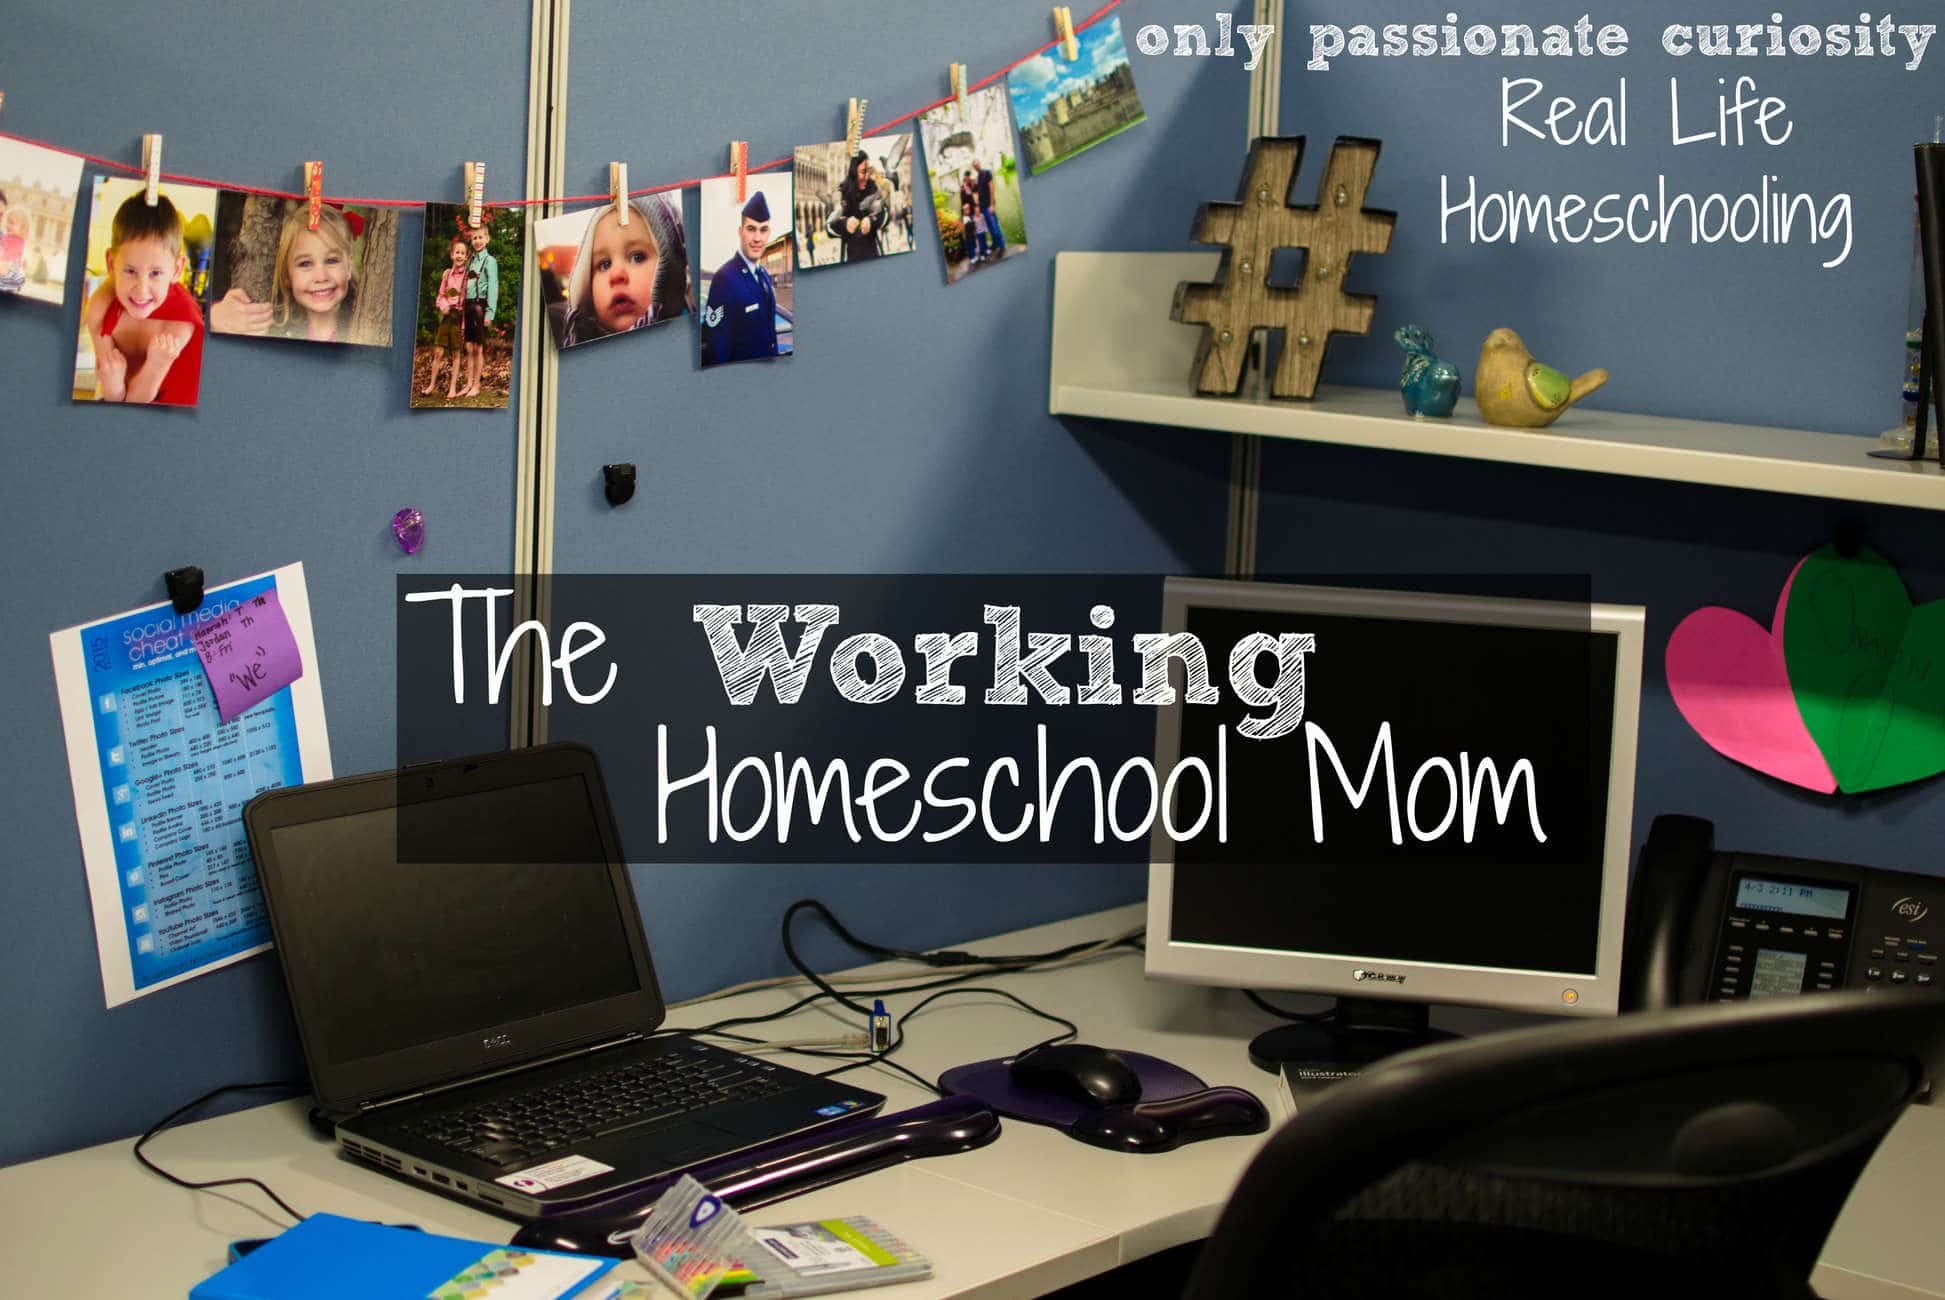 The Working Homeschool Mom